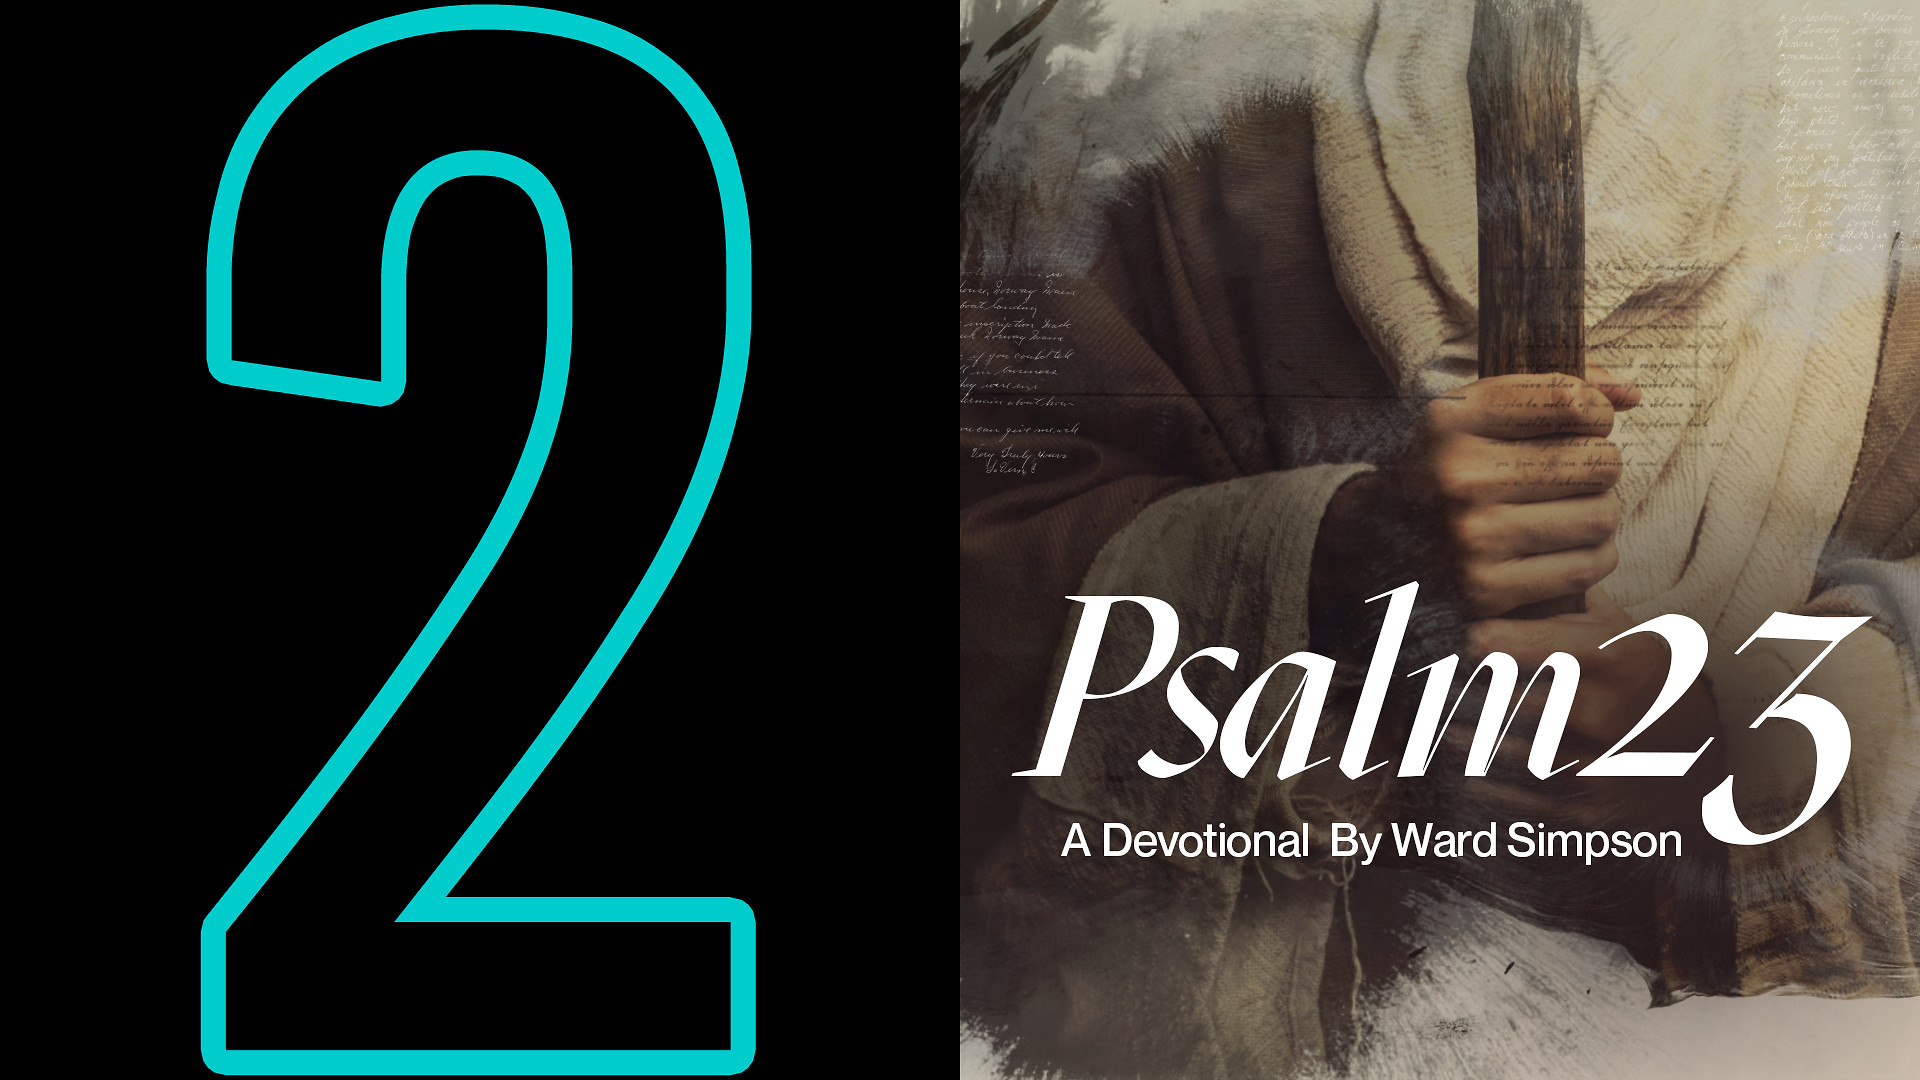 Ep 5 Psalm 23